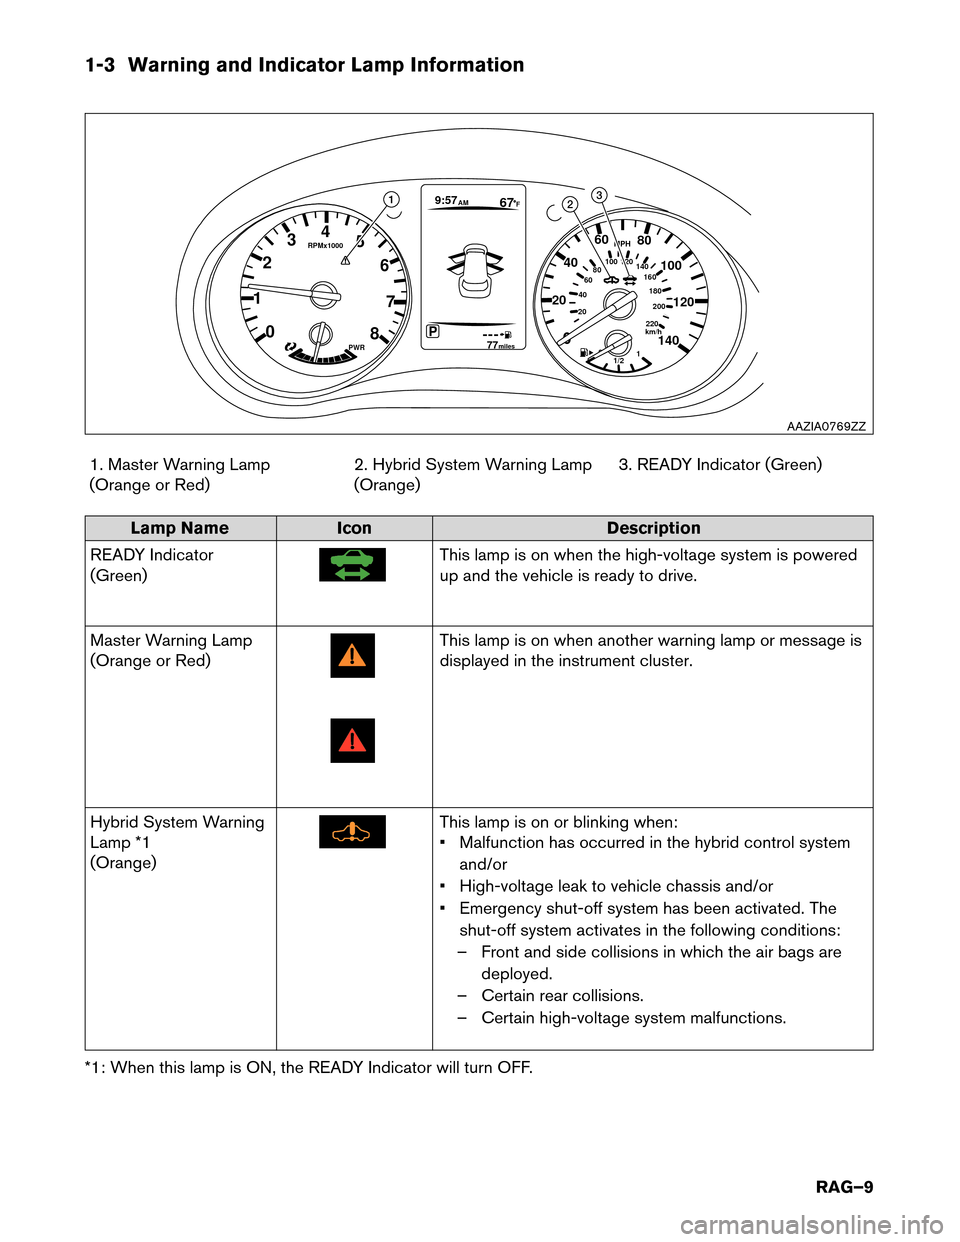 NISSAN ROGUE HYBRID 2017 2.G Roadside Assistance Guide 1-3 Warning and Indicator Lamp Information
1. Master Warning Lamp
(Orange or Red) 2. Hybrid System Warning Lamp
(Orange)3. READY Indicator (Green)Lamp Name
Icon Description
READ
 Y Indicator
(Green) T